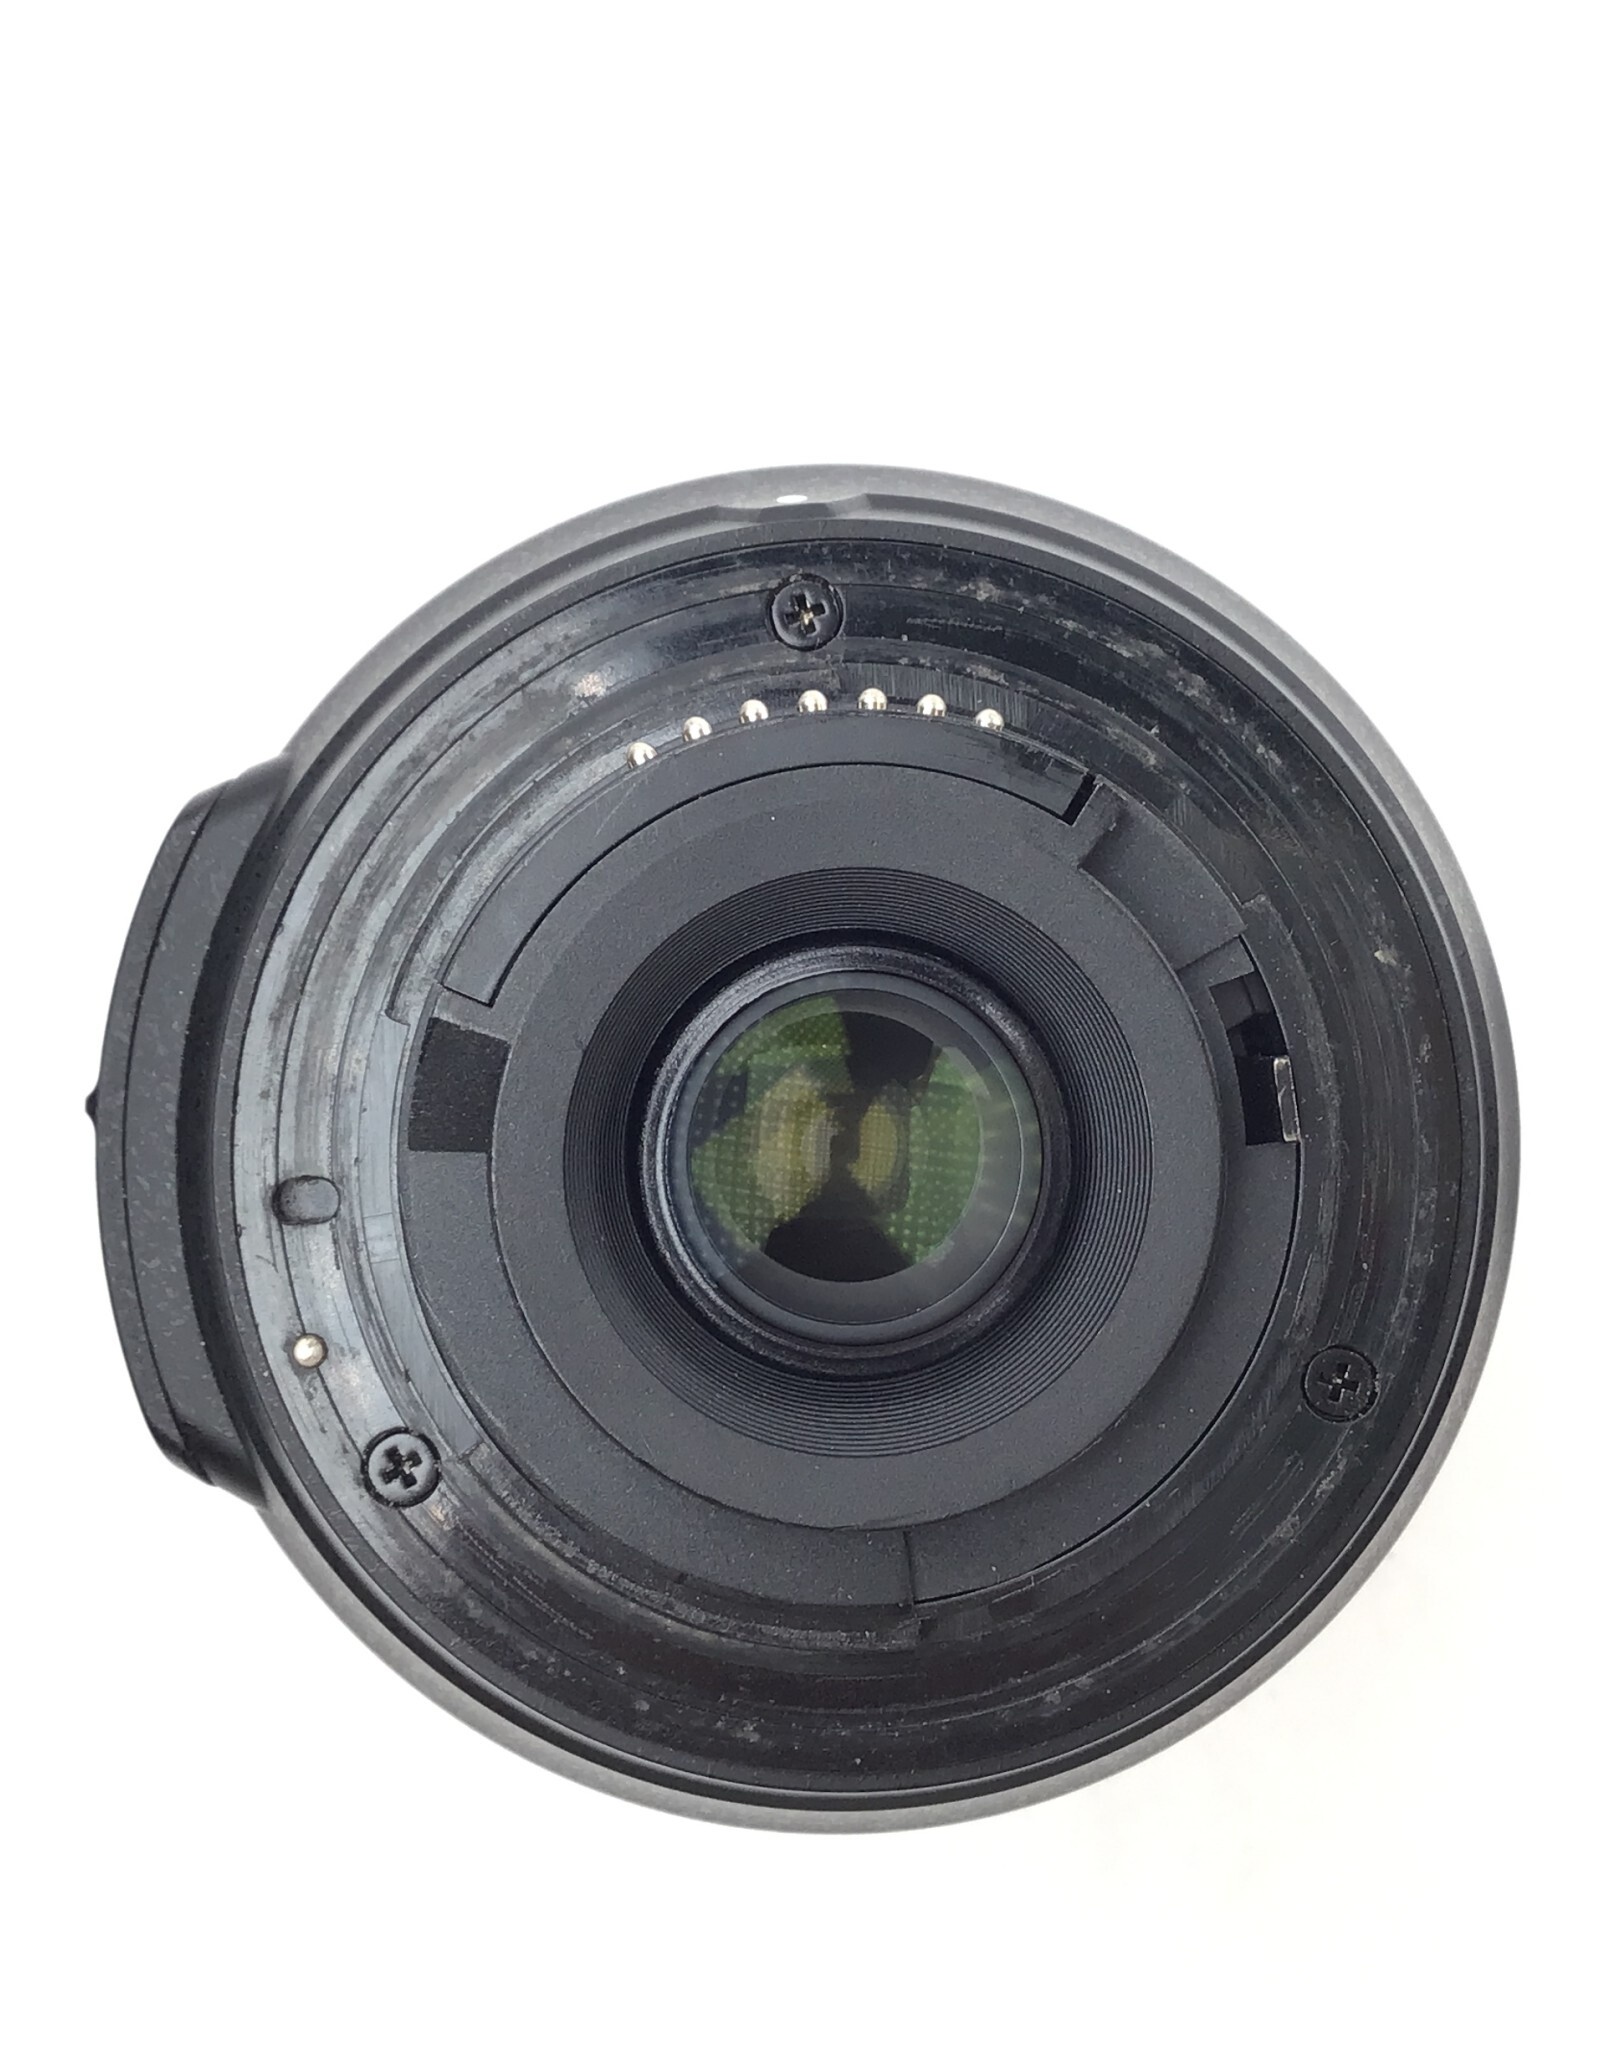 NIKON Nikon AF-S 55-200mm f4-5.6G VR W/ Hood Used Good